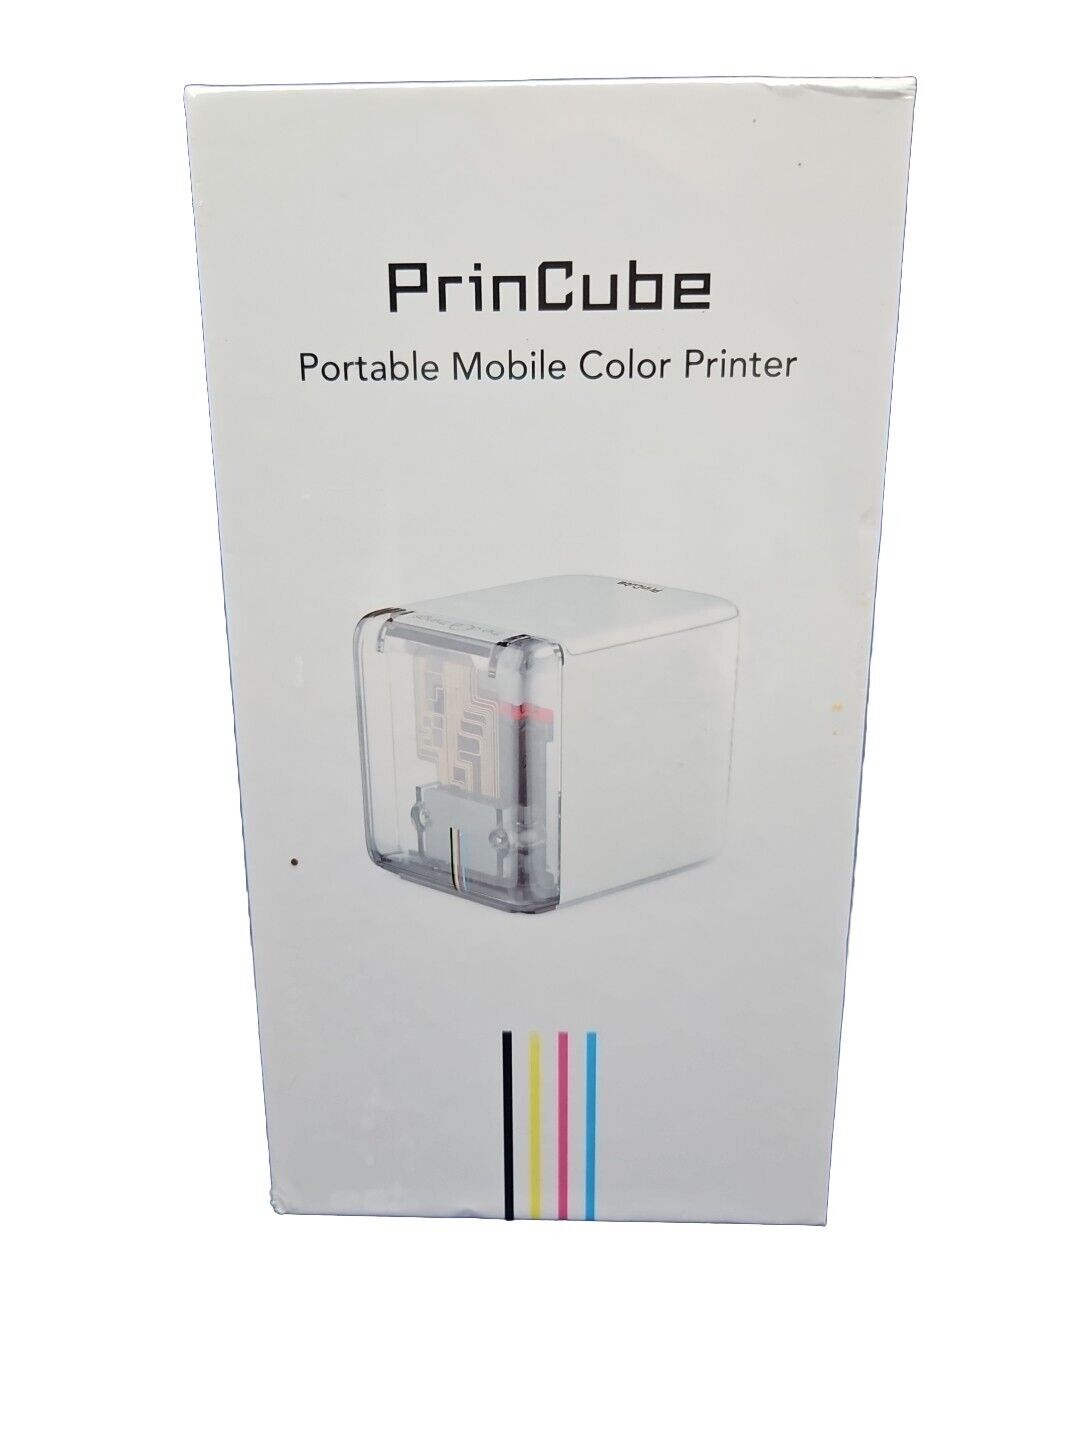 NEW Princube portable mobile color printer New SEALED 